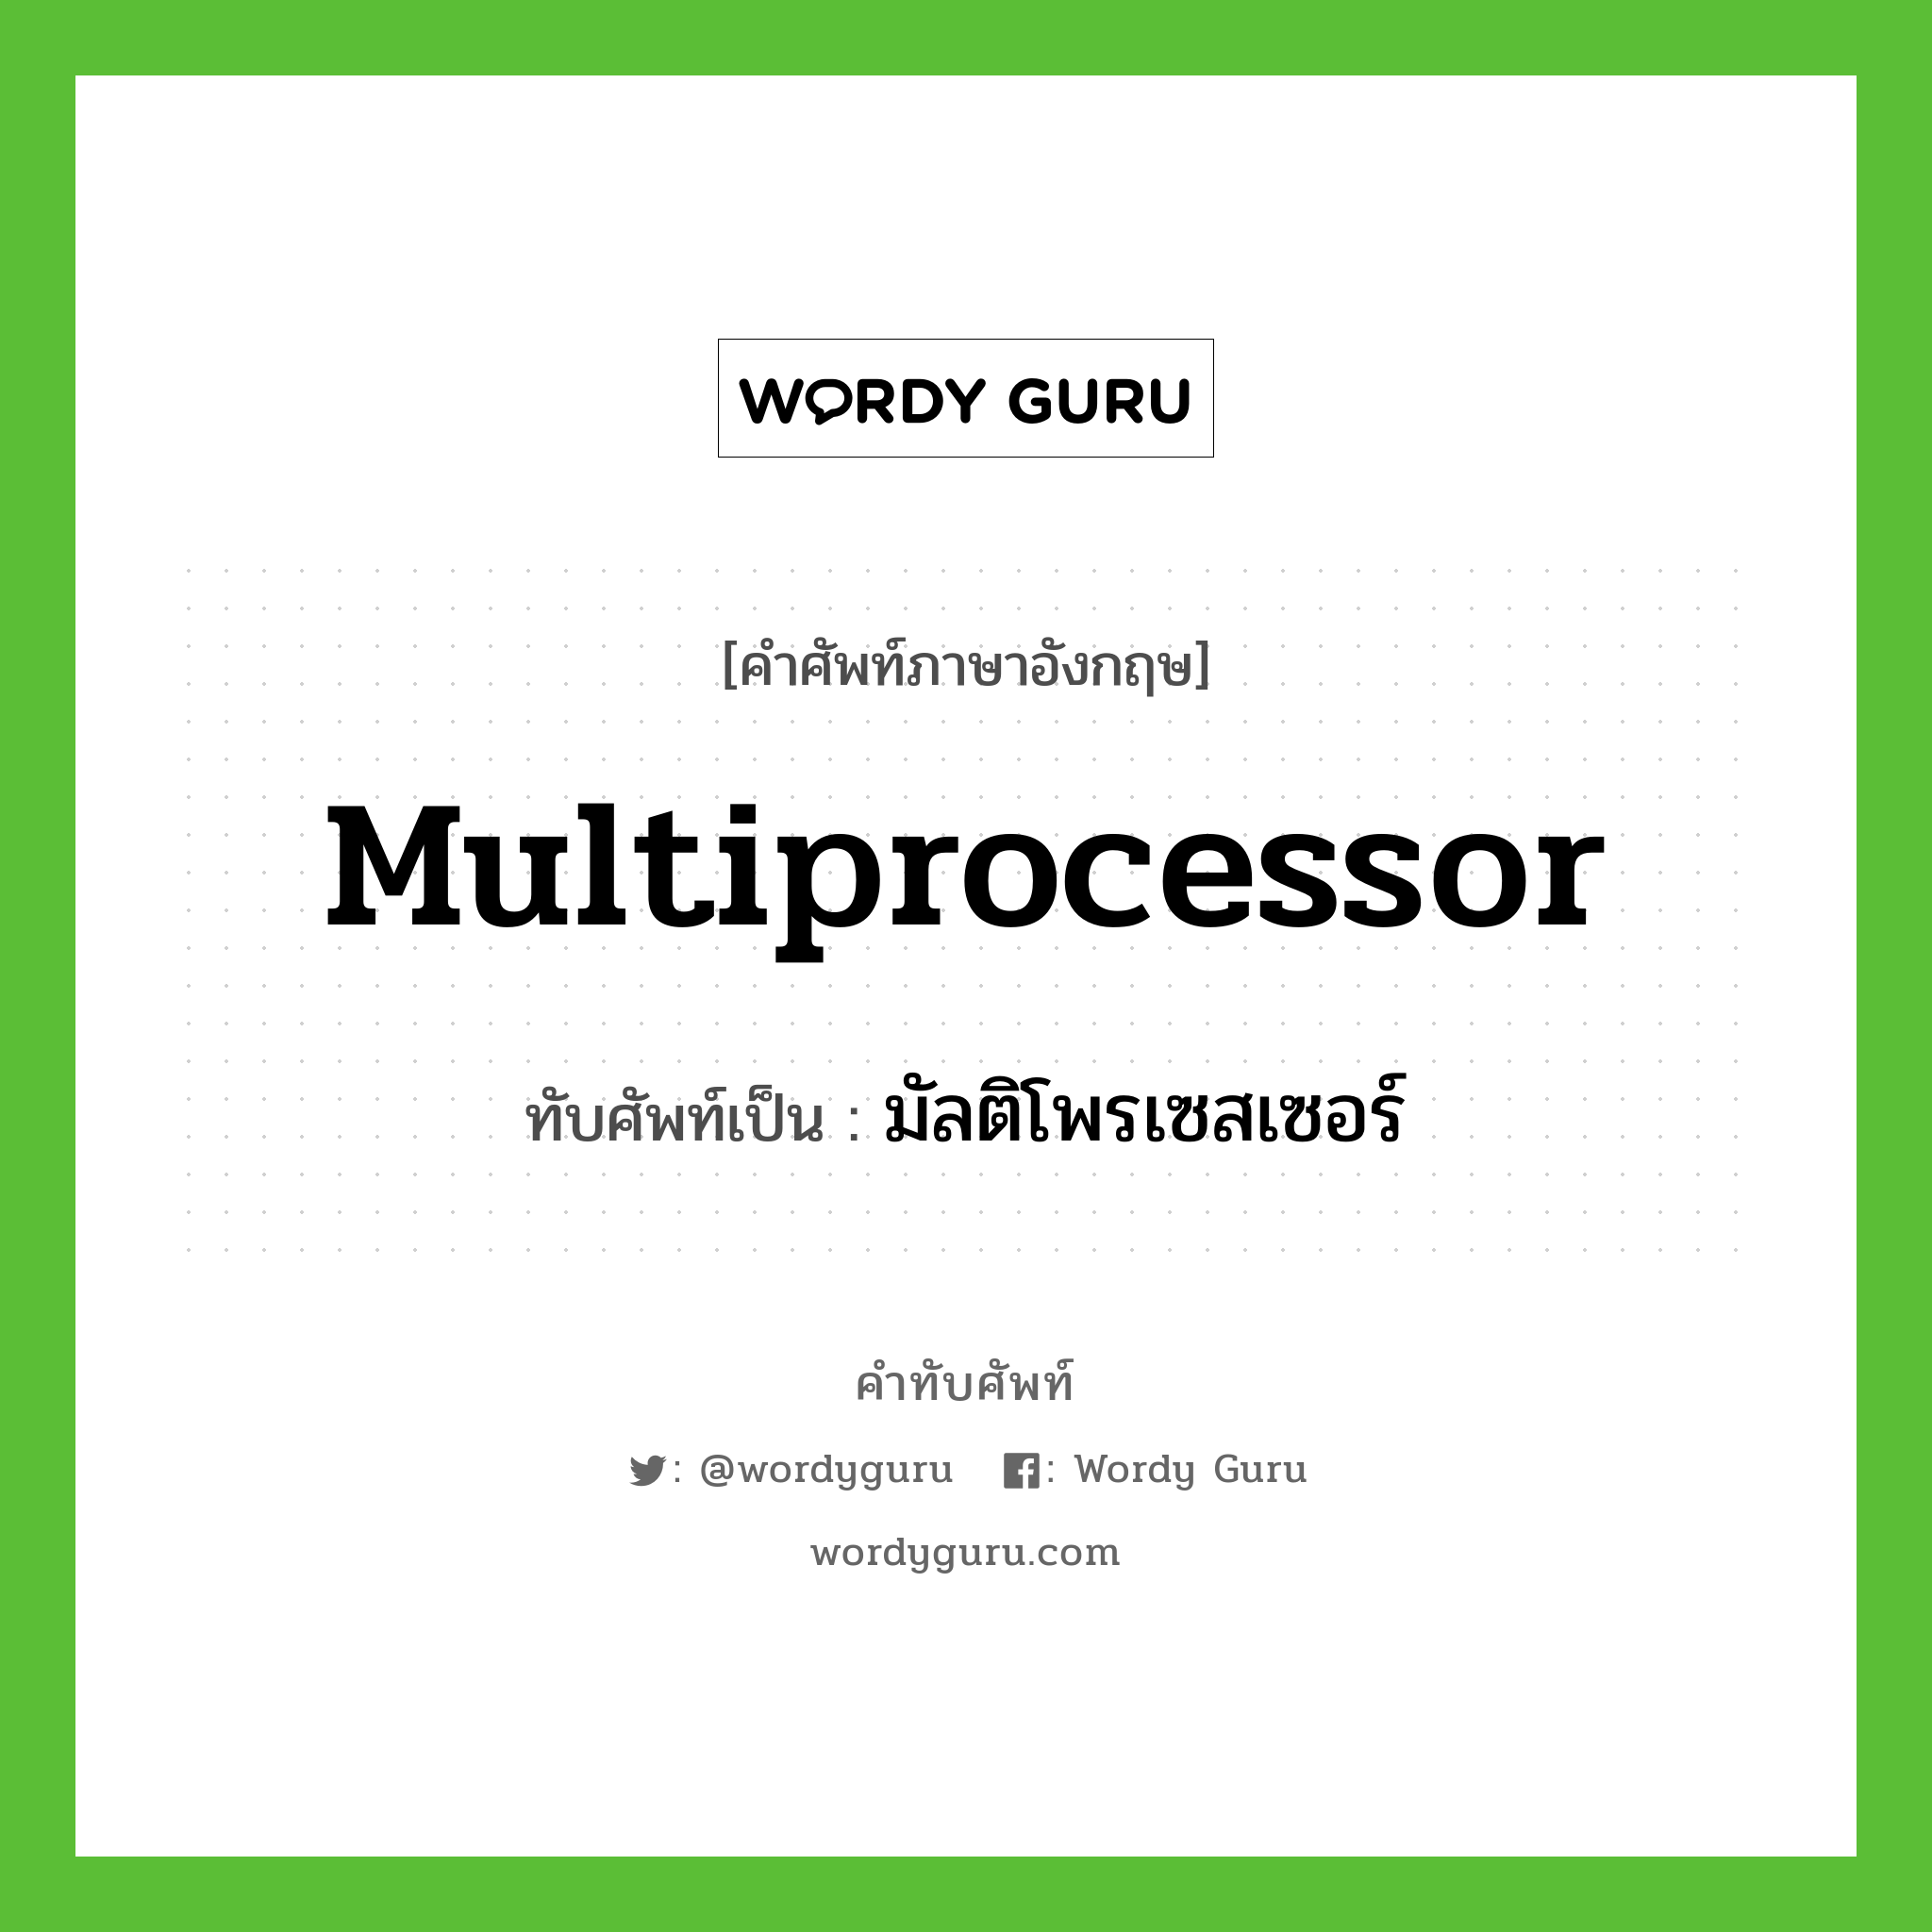 multiprocessor เขียนเป็นคำไทยว่าอะไร?, คำศัพท์ภาษาอังกฤษ multiprocessor ทับศัพท์เป็น มัลติโพรเซสเซอร์